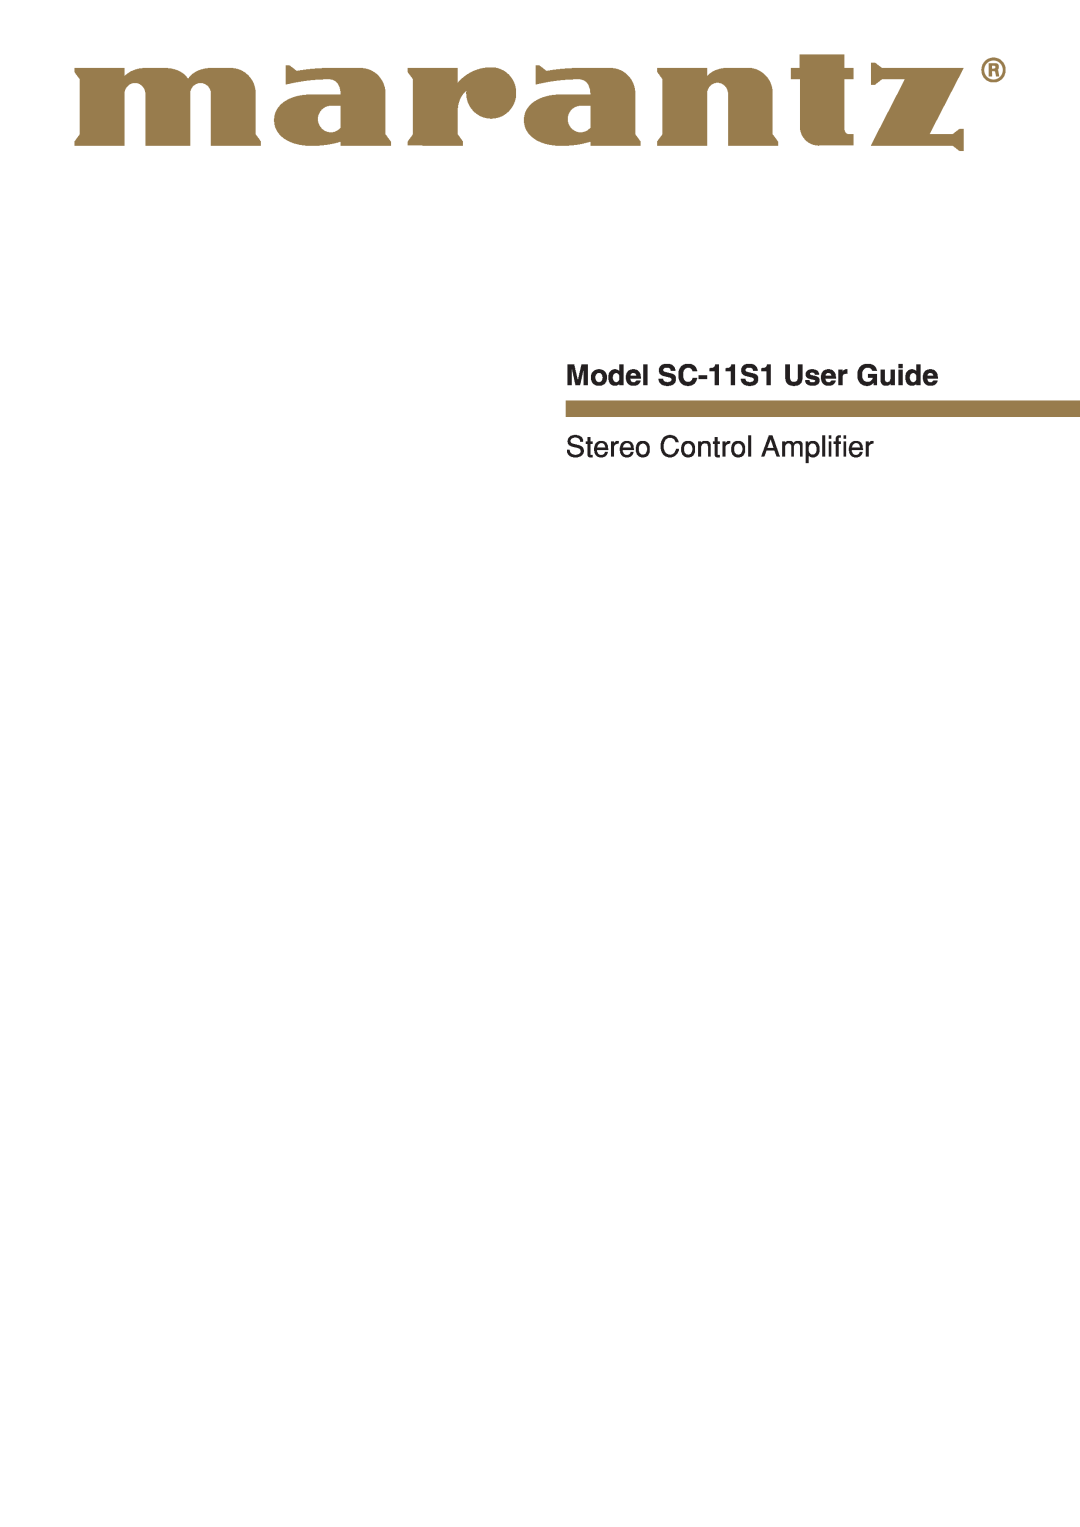 Marantz manual Model SC-11S1User Guide, Stereo Control Ampliﬁer 